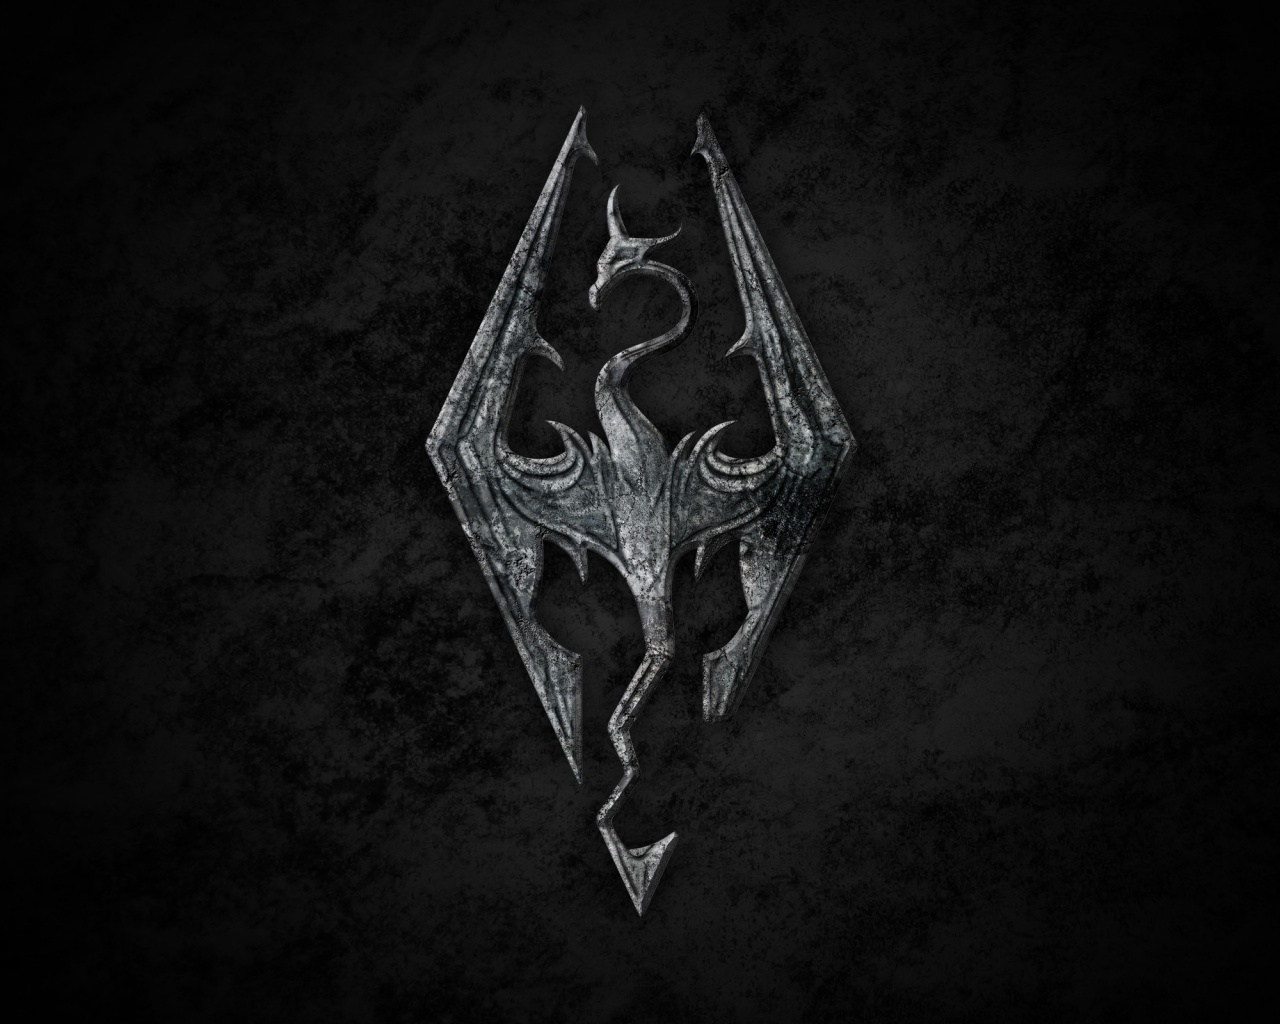 Логотип Skyrim обои